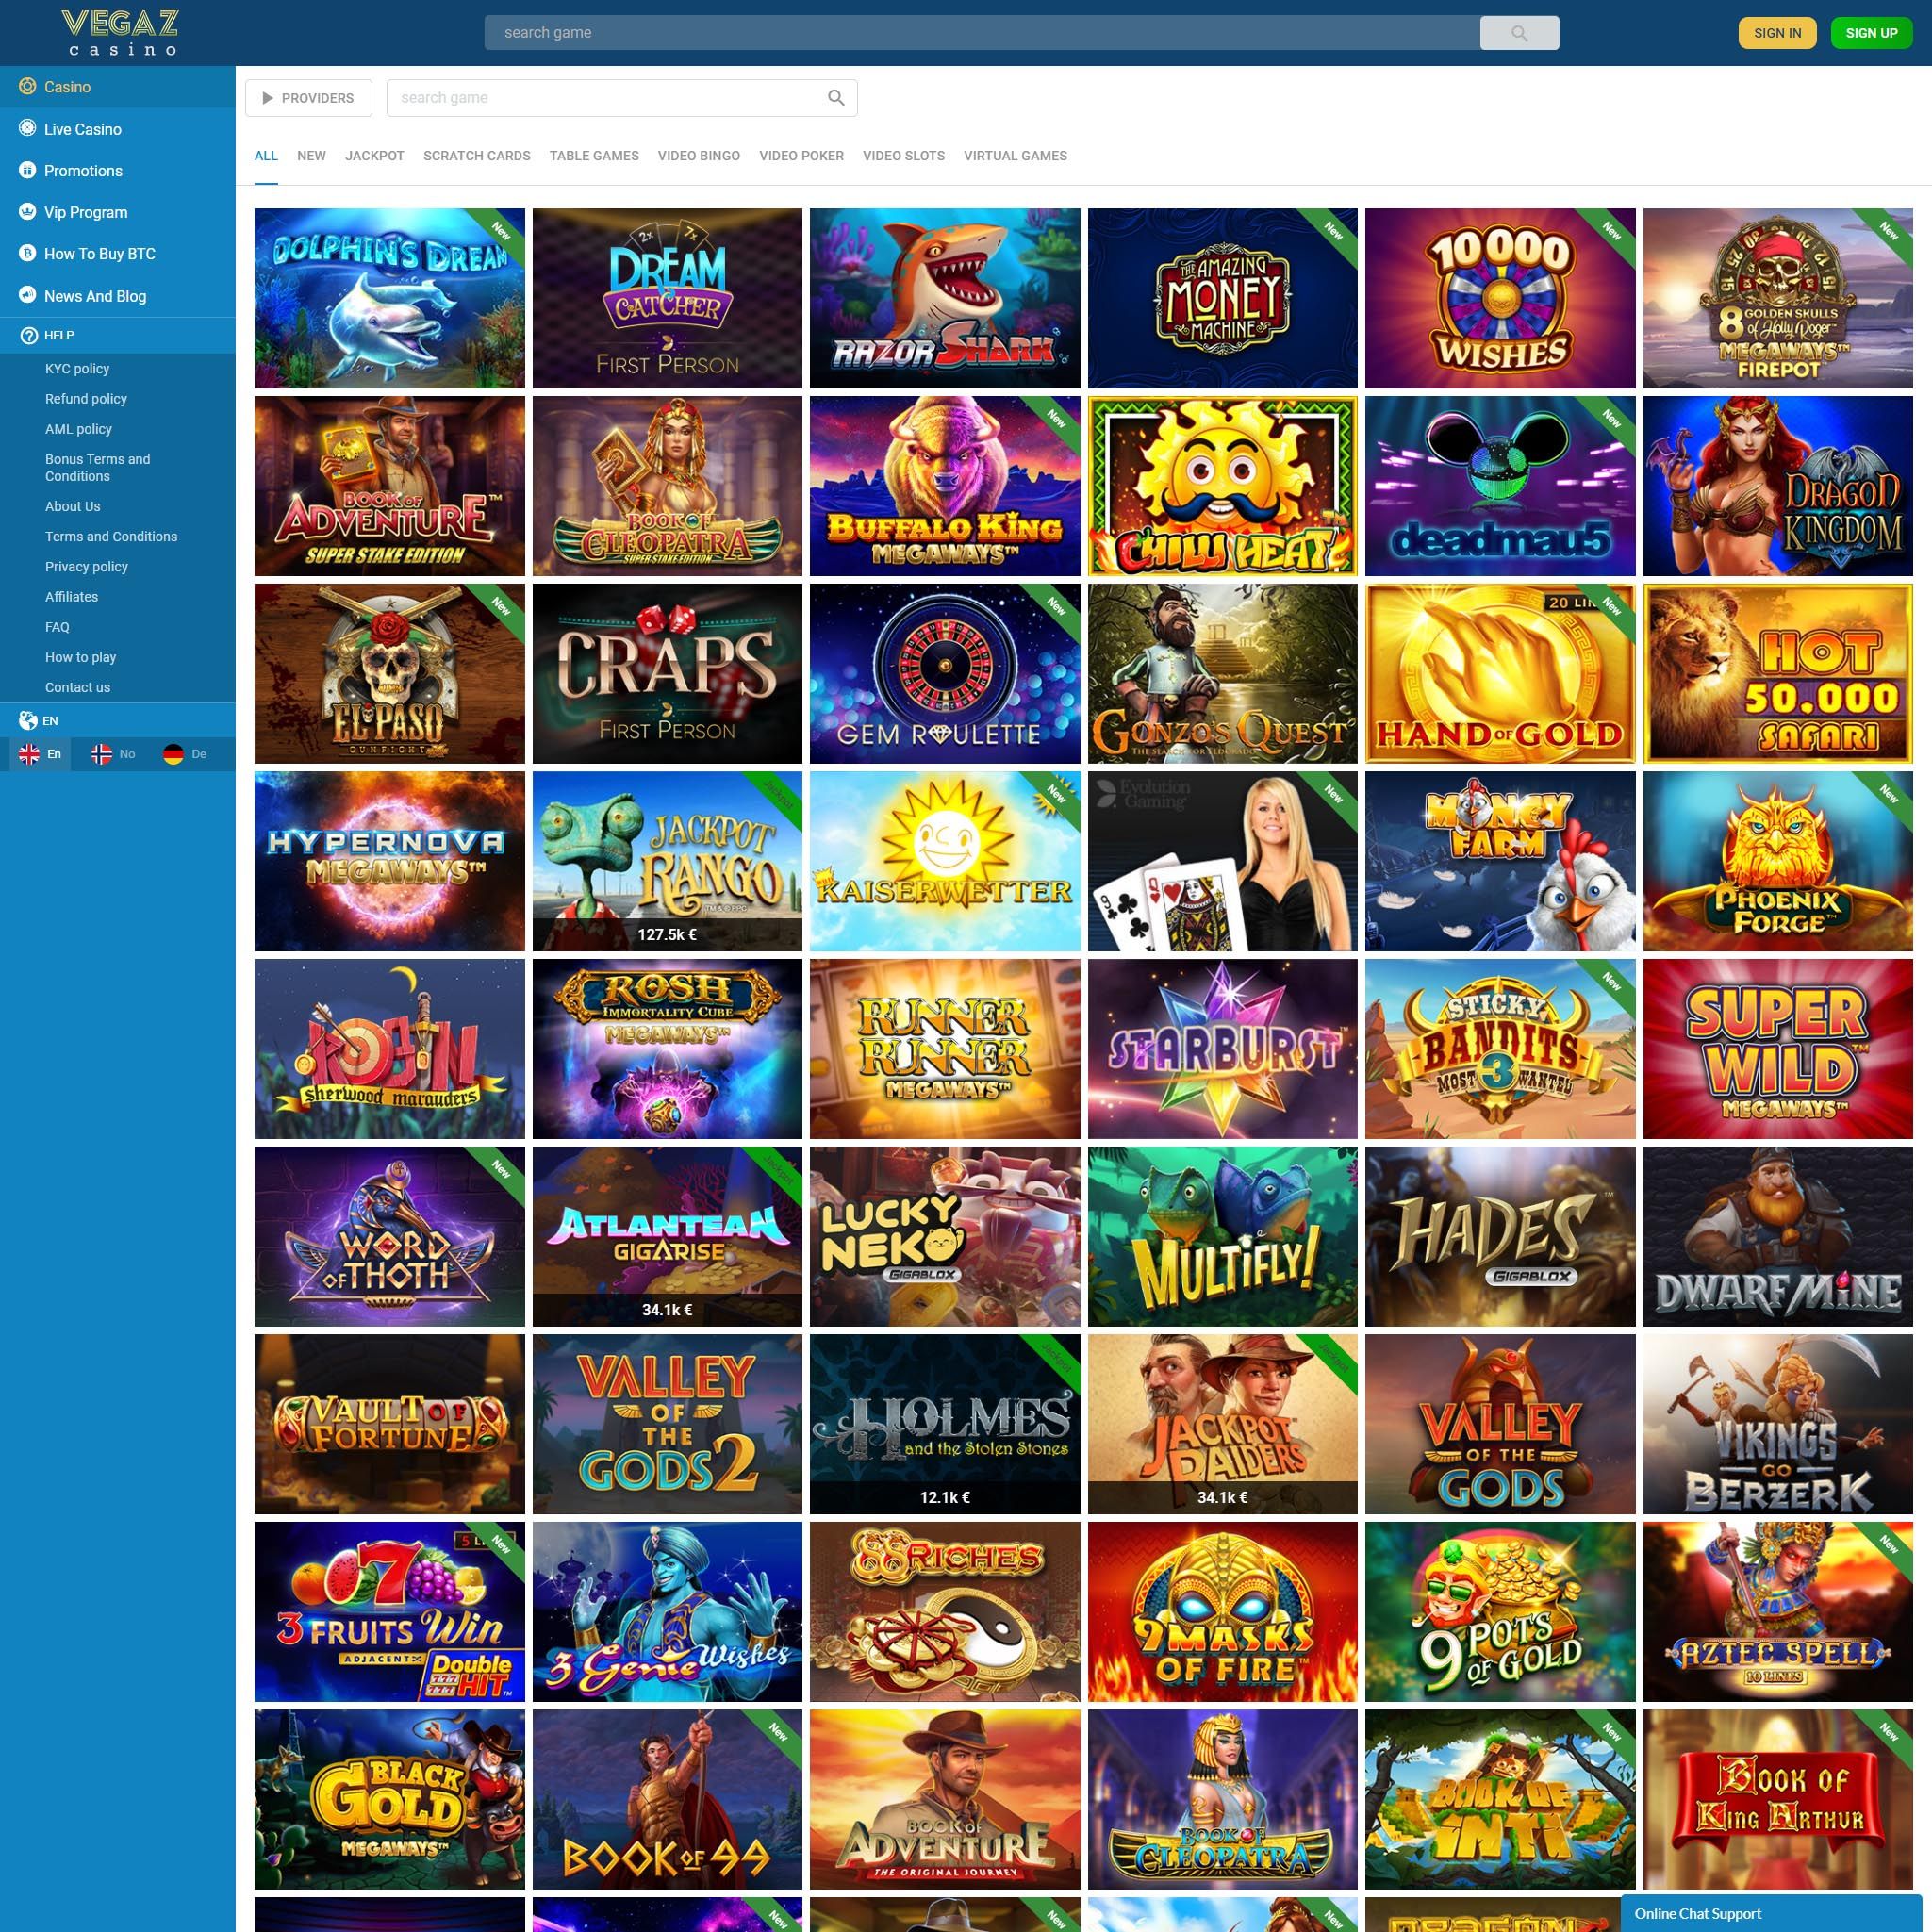 Vegaz Casino full games catalogue